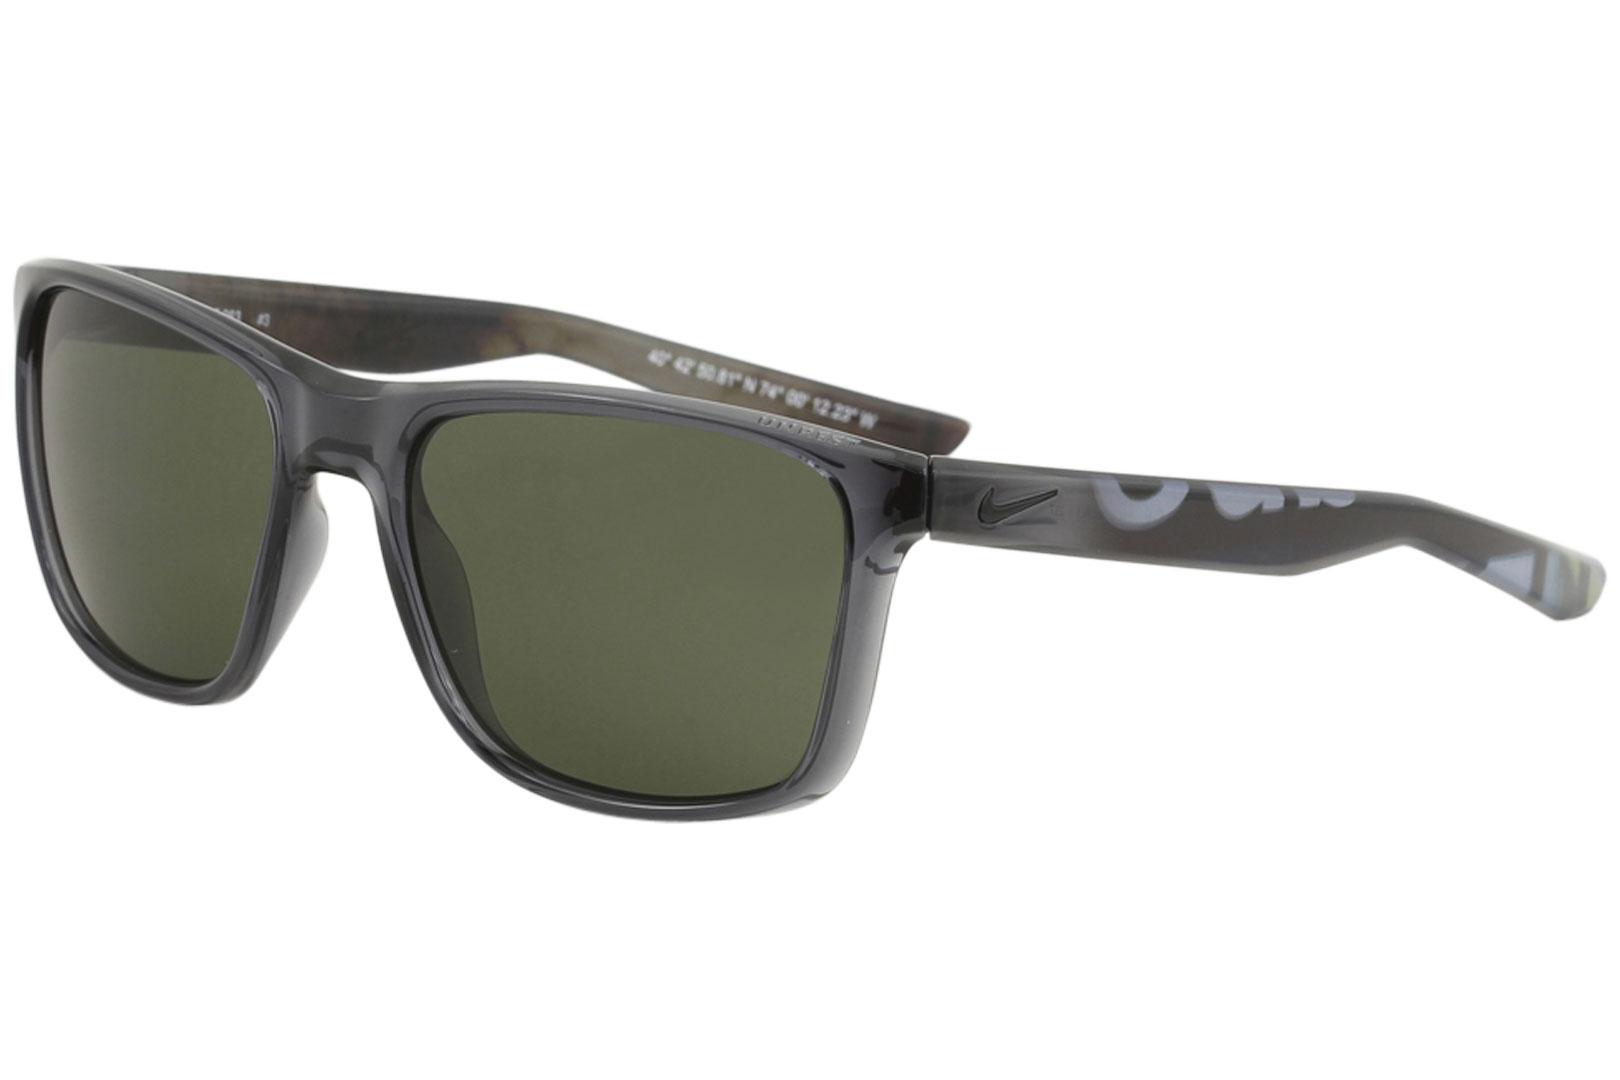 Nike SB Men's Unrest Square Sunglasses - Crystal Anthracite/Green   063 - Lens 57 Bridge 19 Temple 145mm